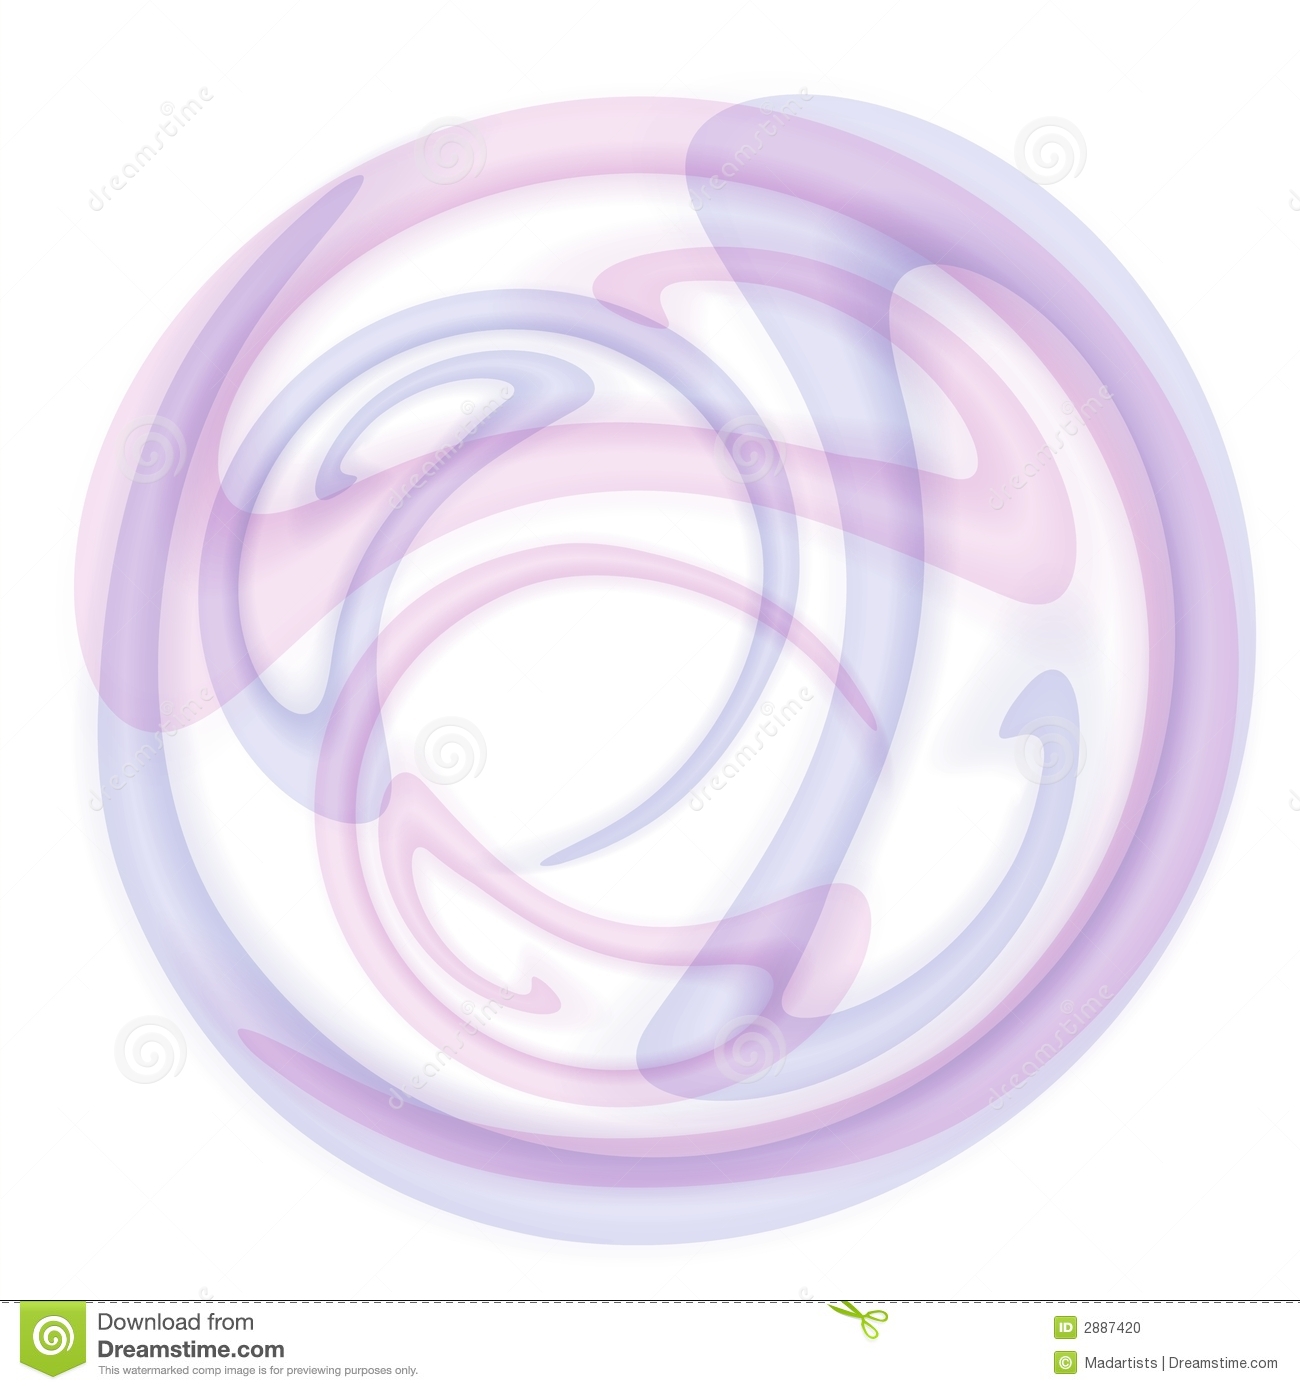 Smoke Rings Opaque Swirls Stock Photo   Image  2887420